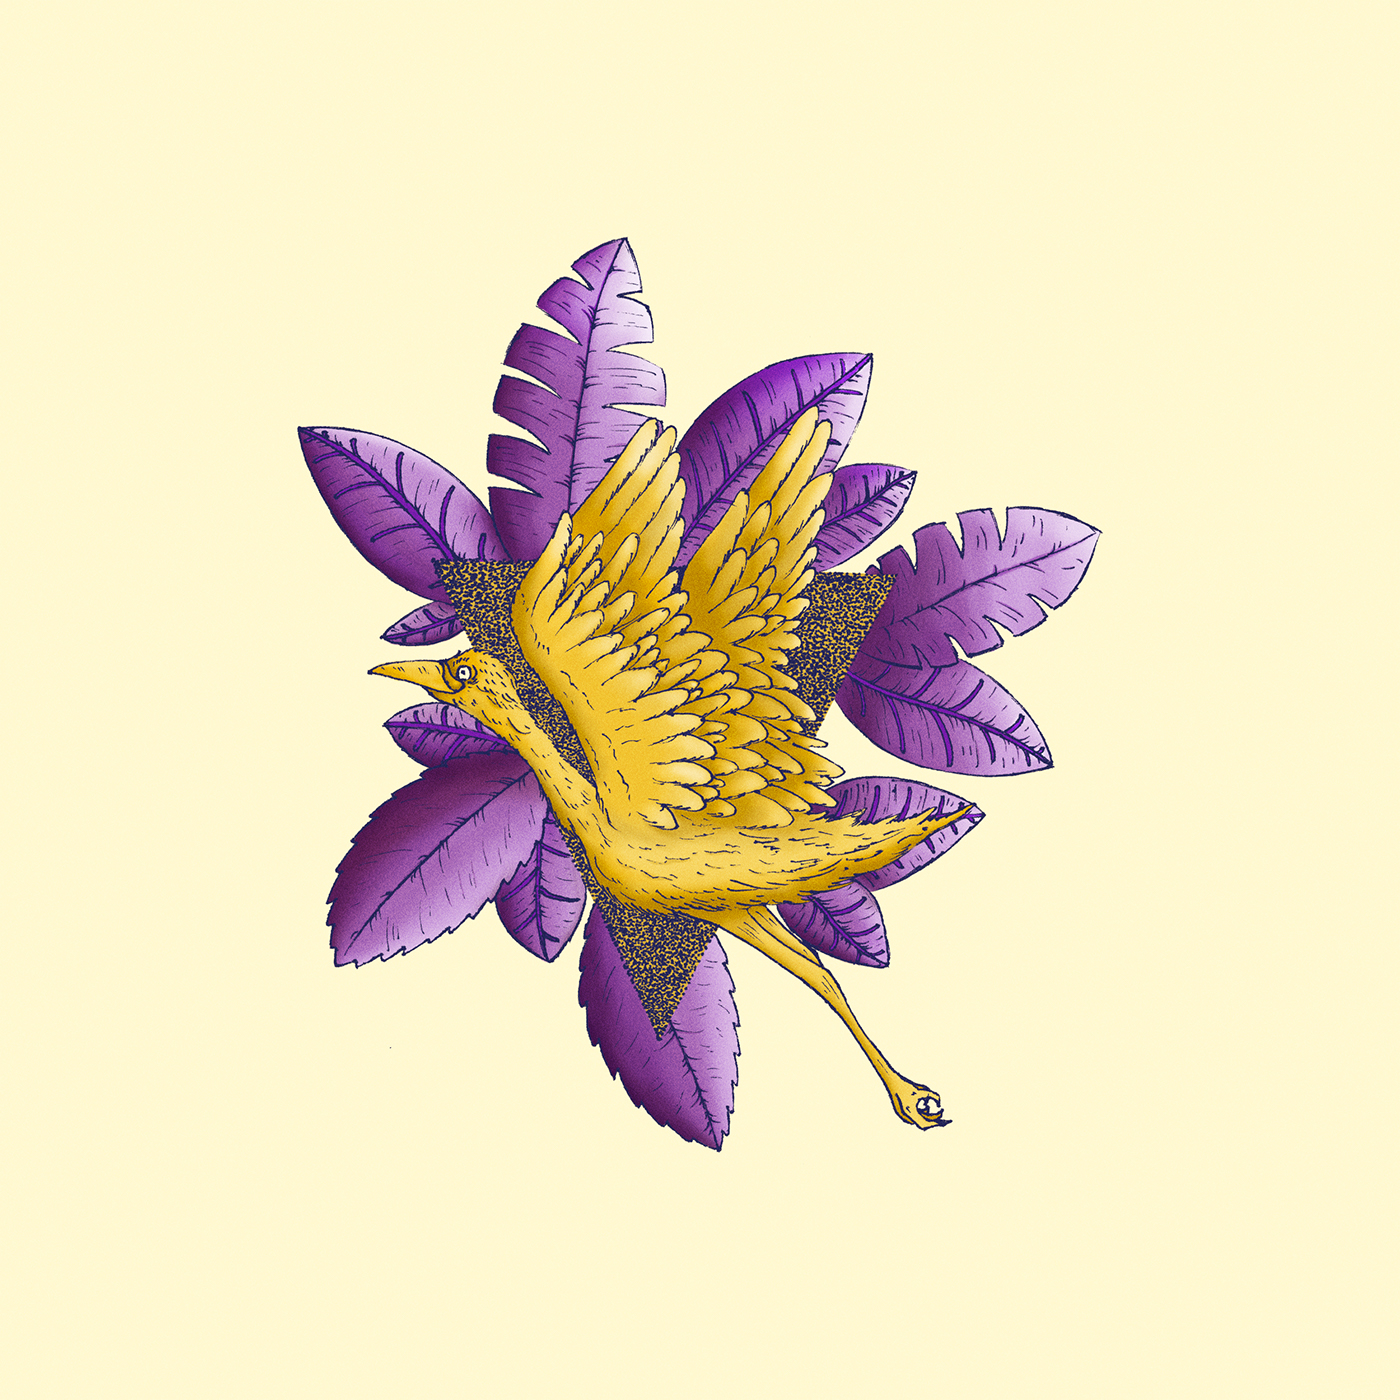 gruya ilustracion dorado gold purple